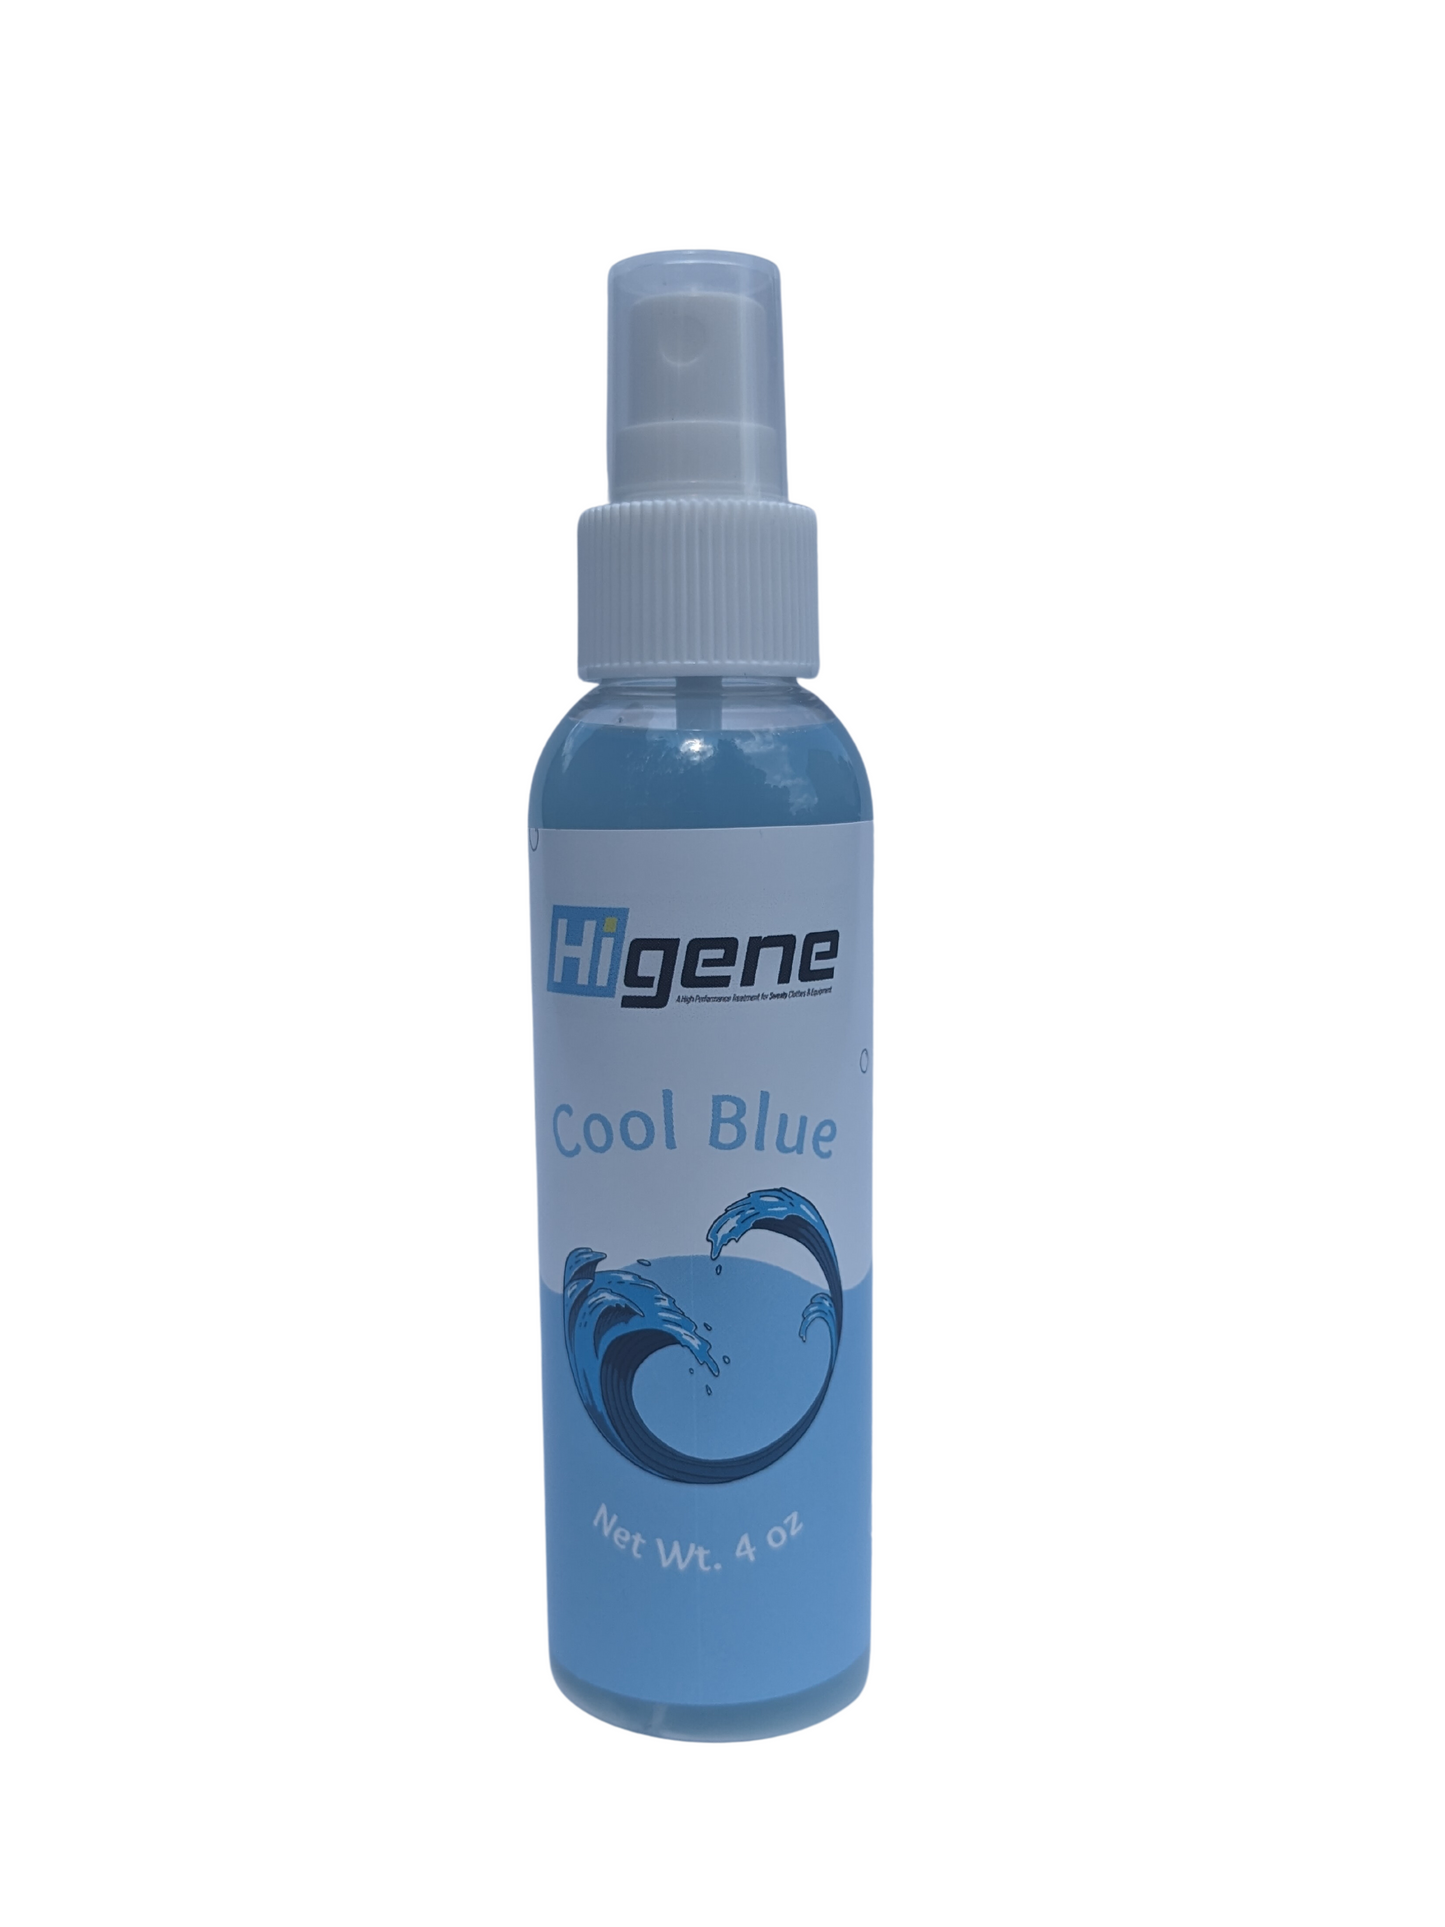 Higene - Cool Blue laundry spray